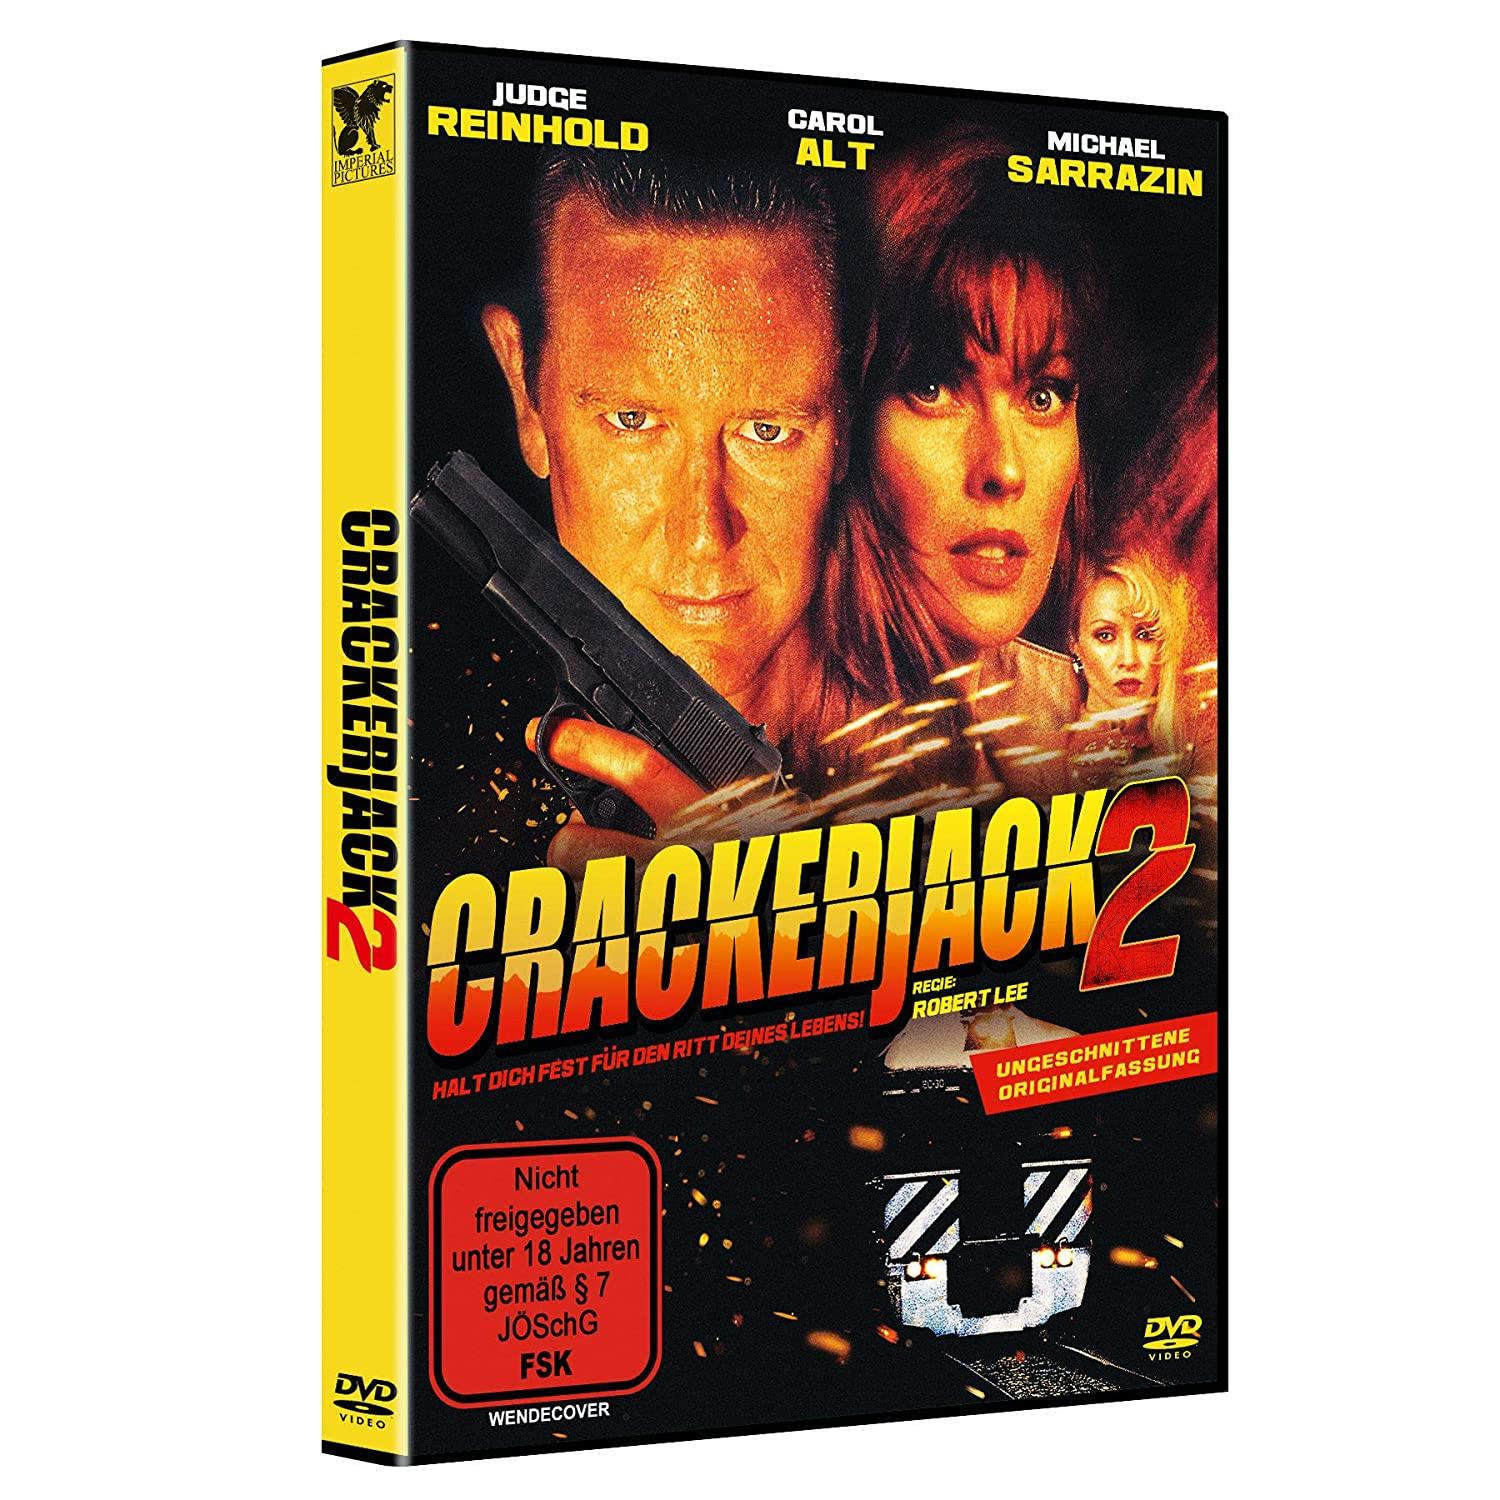 DVD Crackerjack 2